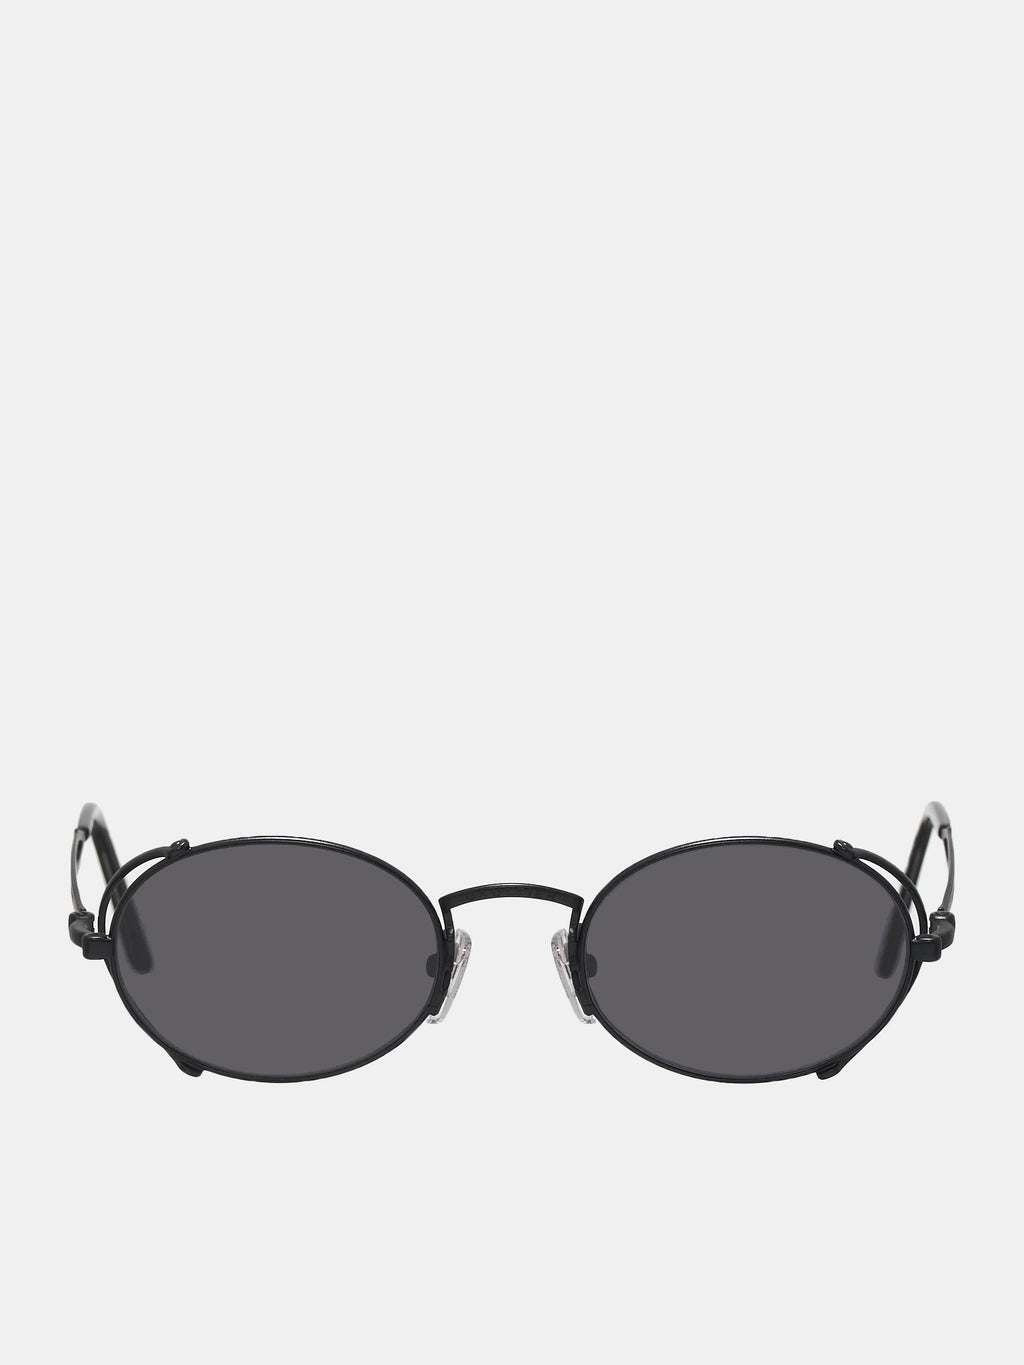 Jean Paul Gaultier | H.Lorenzo|Rose Gold 55-3175 Sunglasses (LU003-X032-21-PINK)